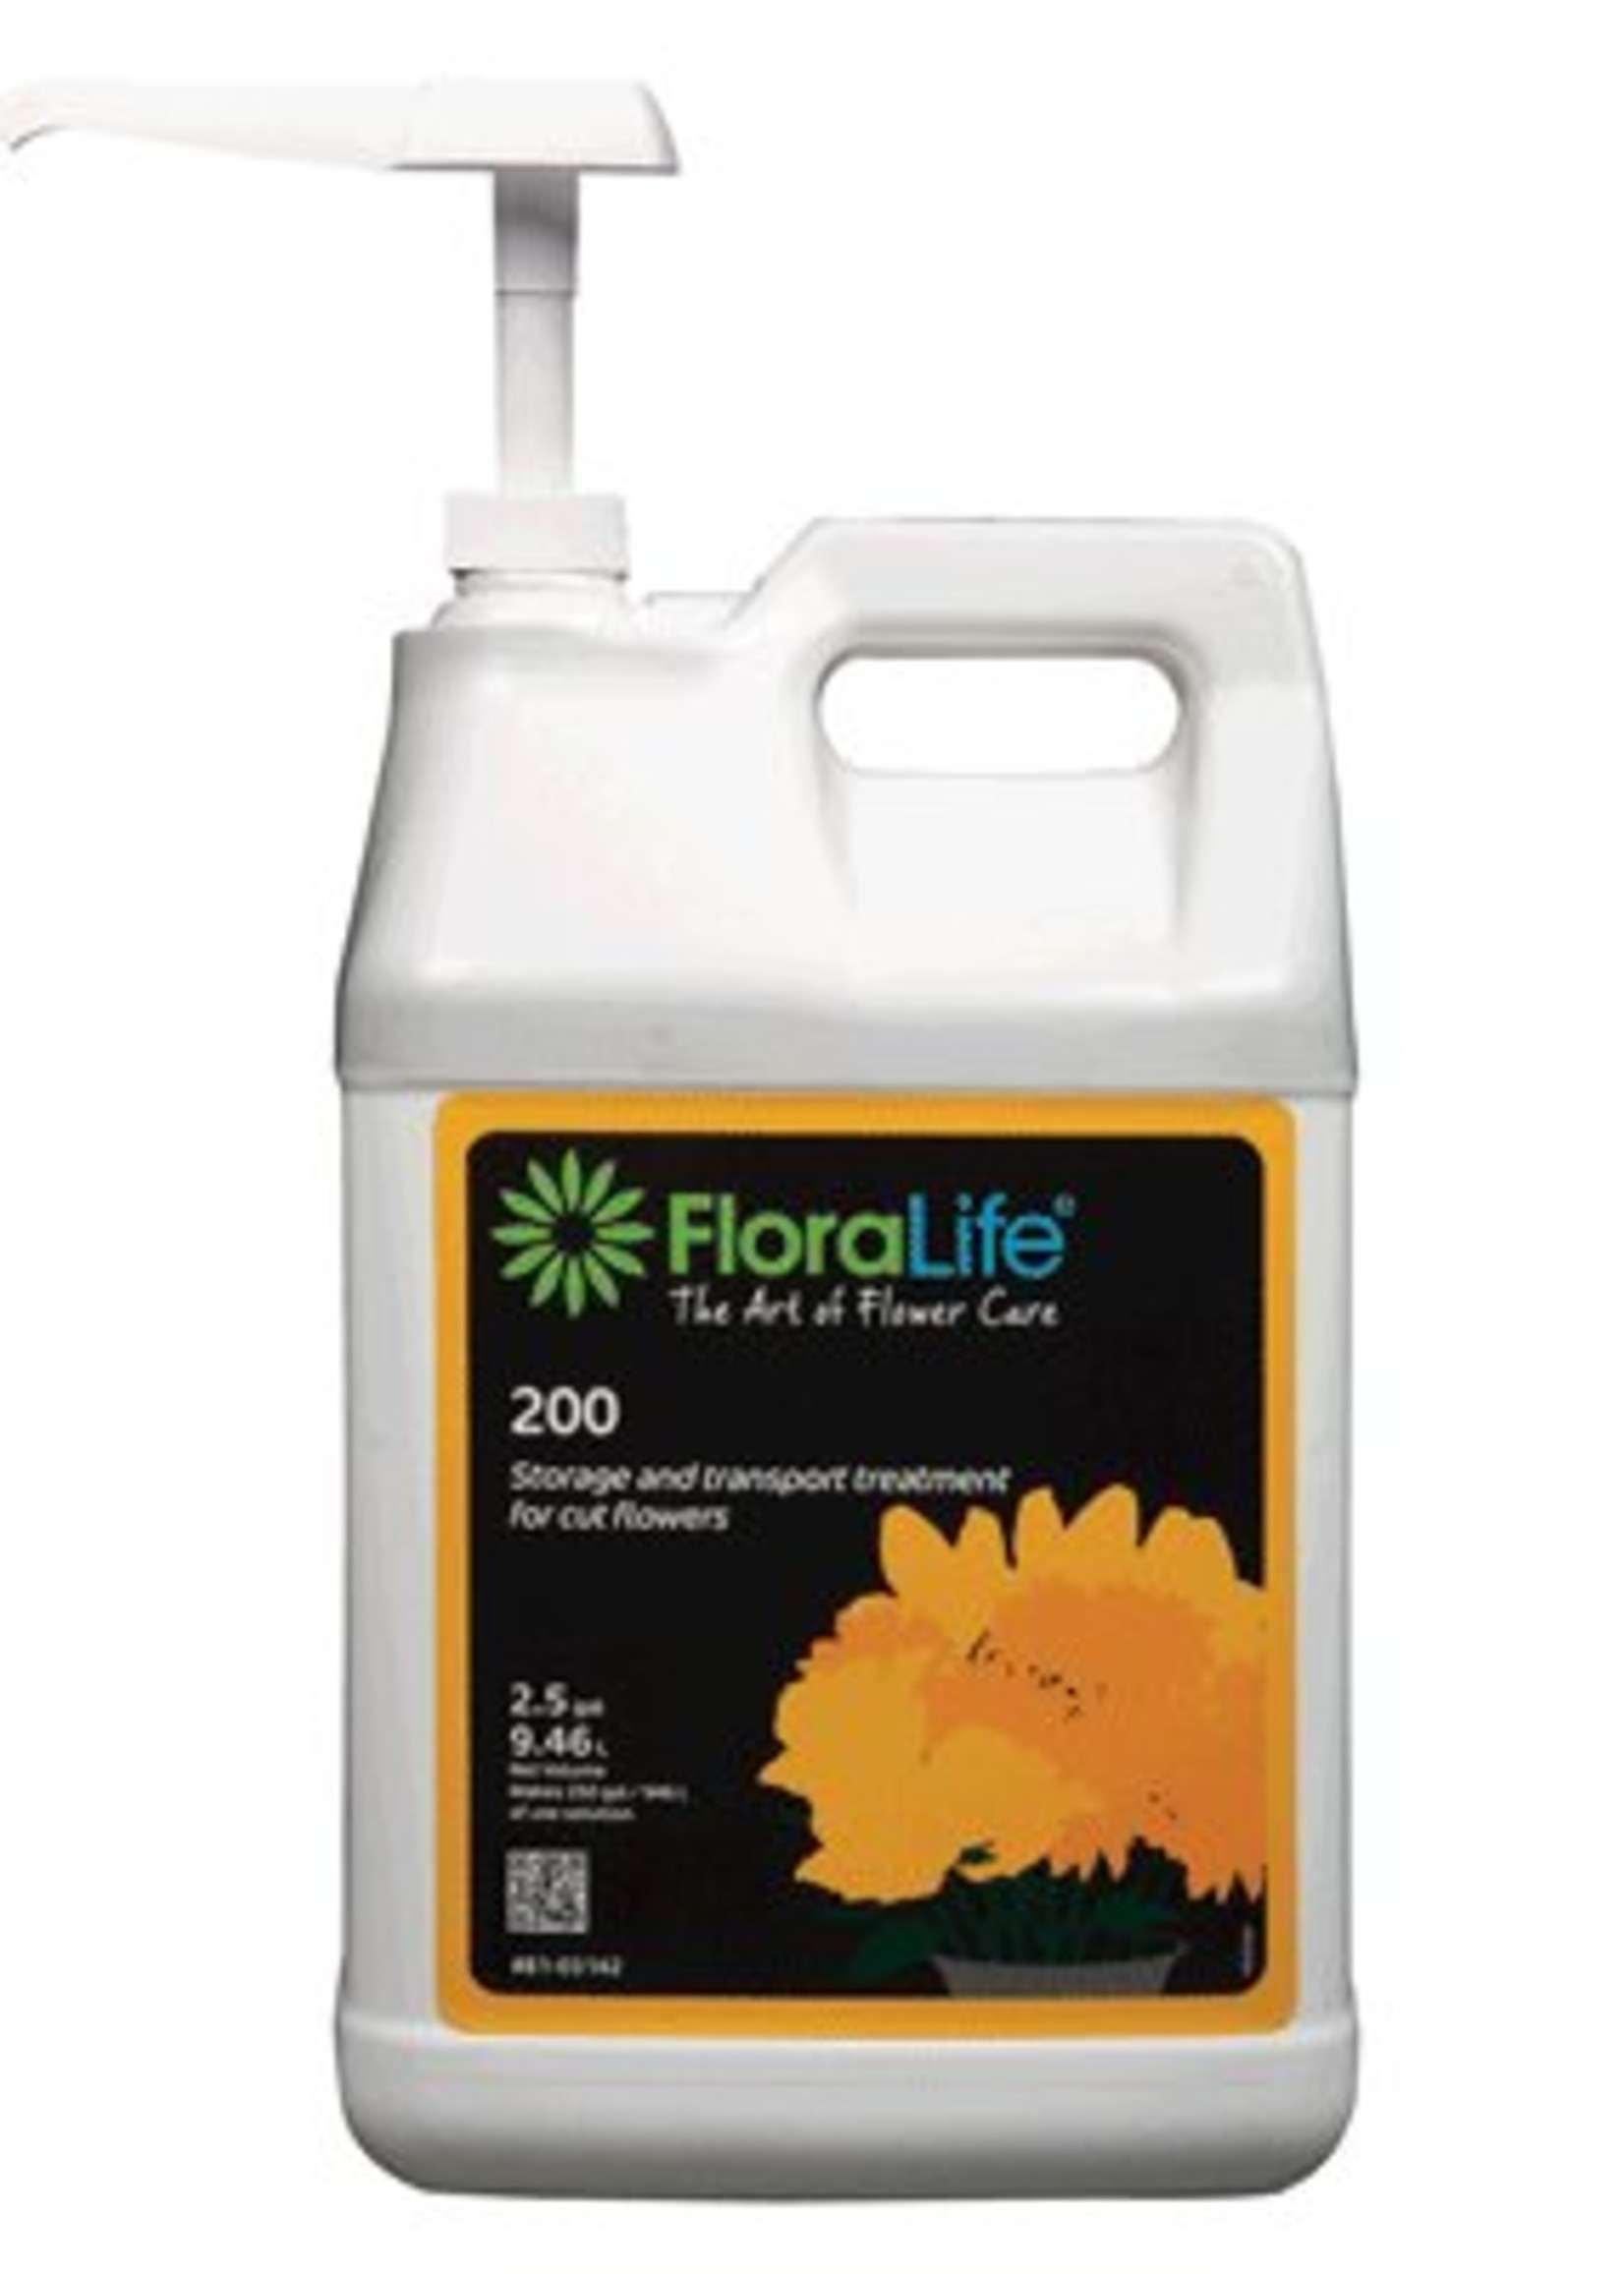 Floralife® 200 storage and transport